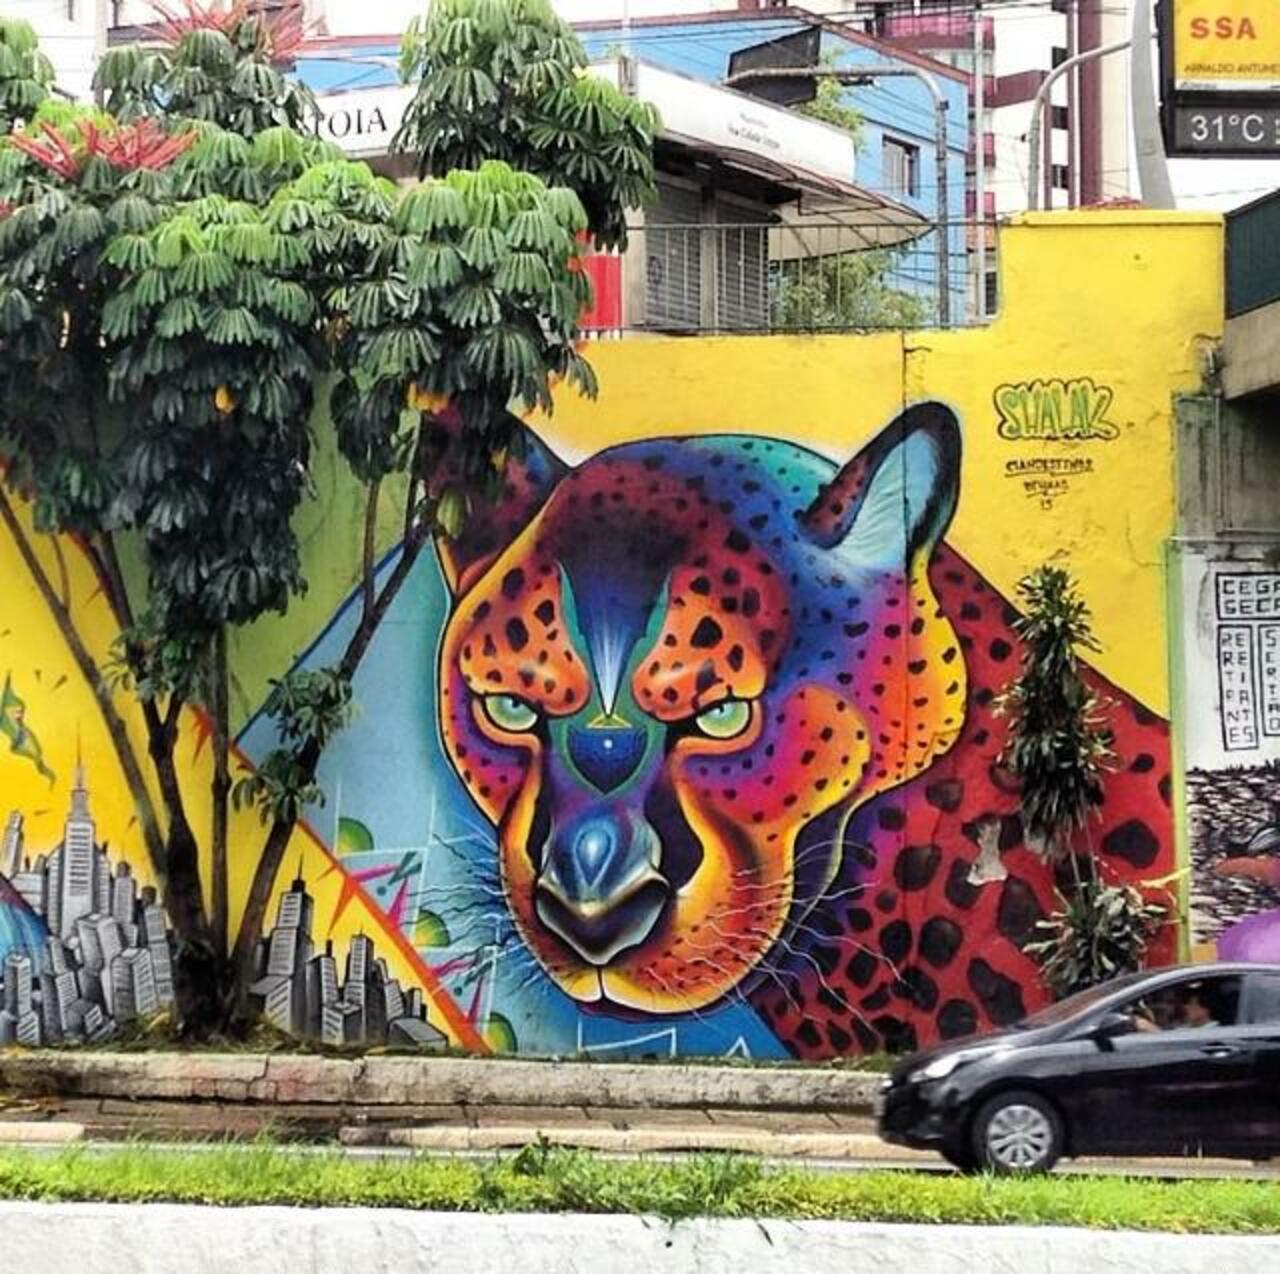 Artist ShalakAttack beautiful & colourful nature in Street Art piece in São Paulo 

#art #graffiti #mural #streetart http://t.co/C4MQNXaJYp